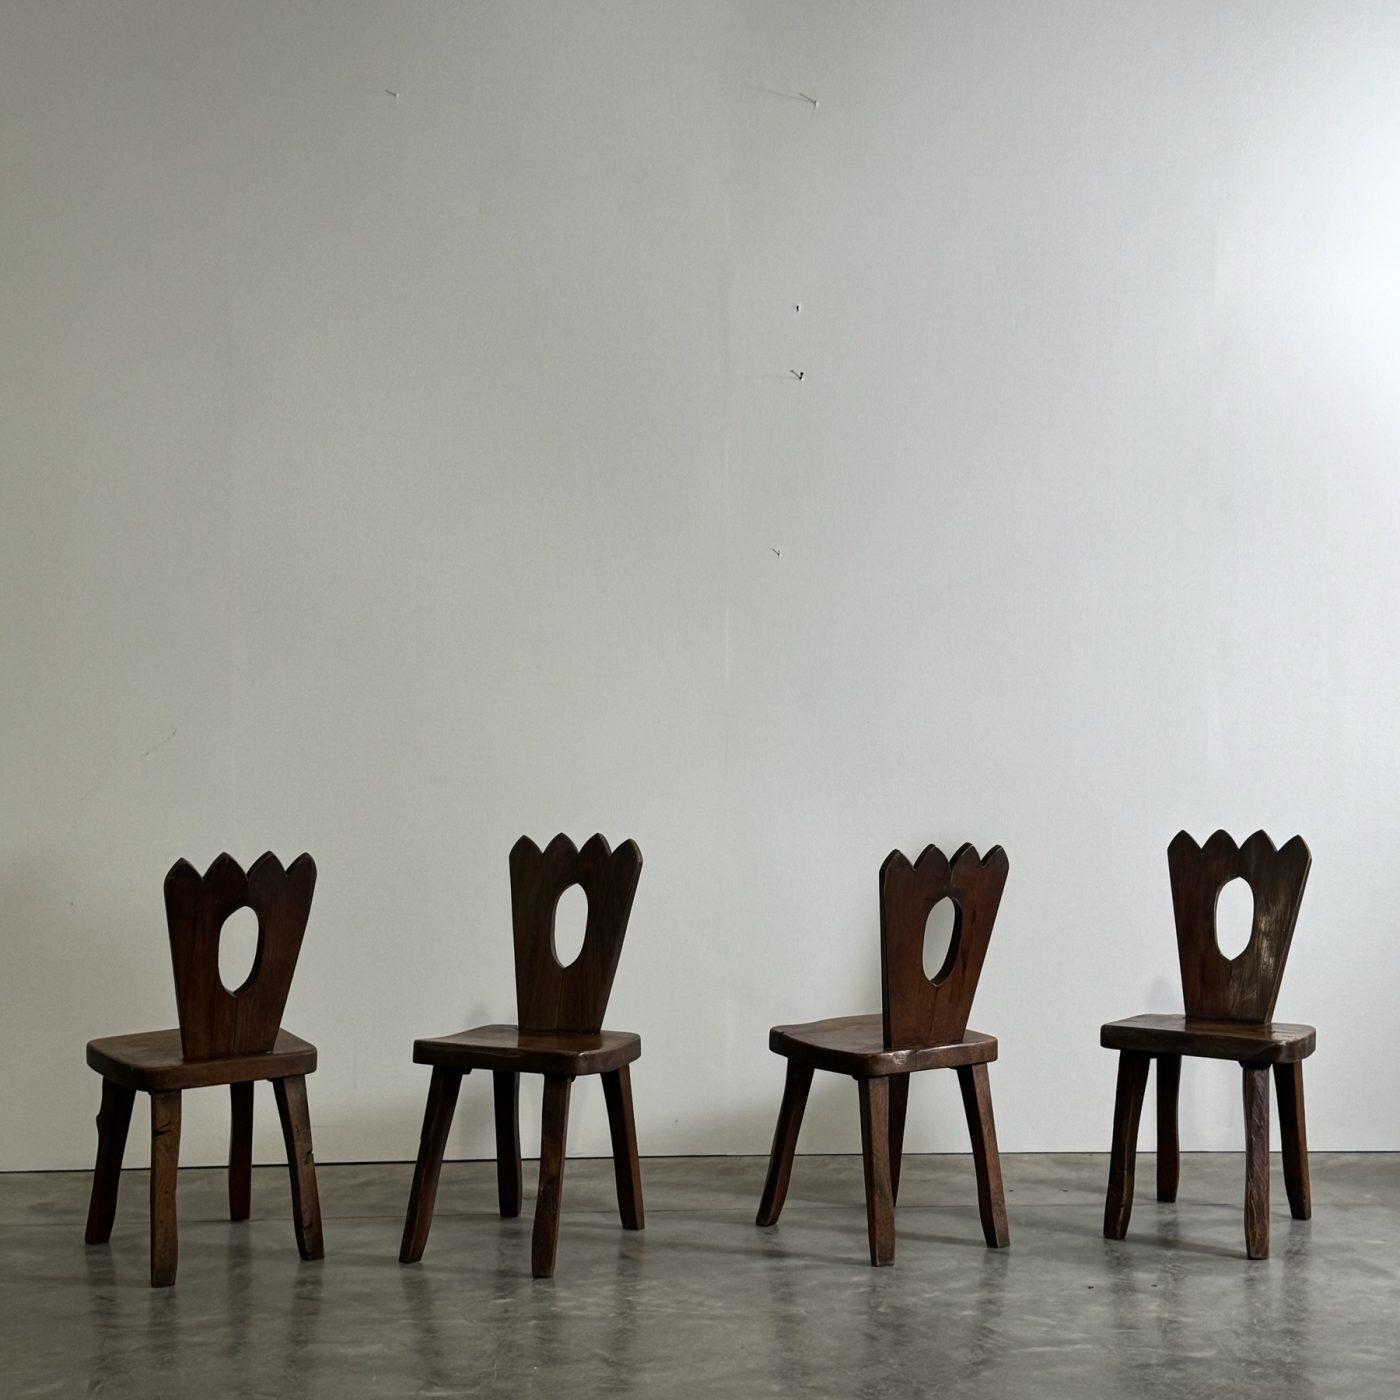 objet-vagabond-brutalist-chairs0000